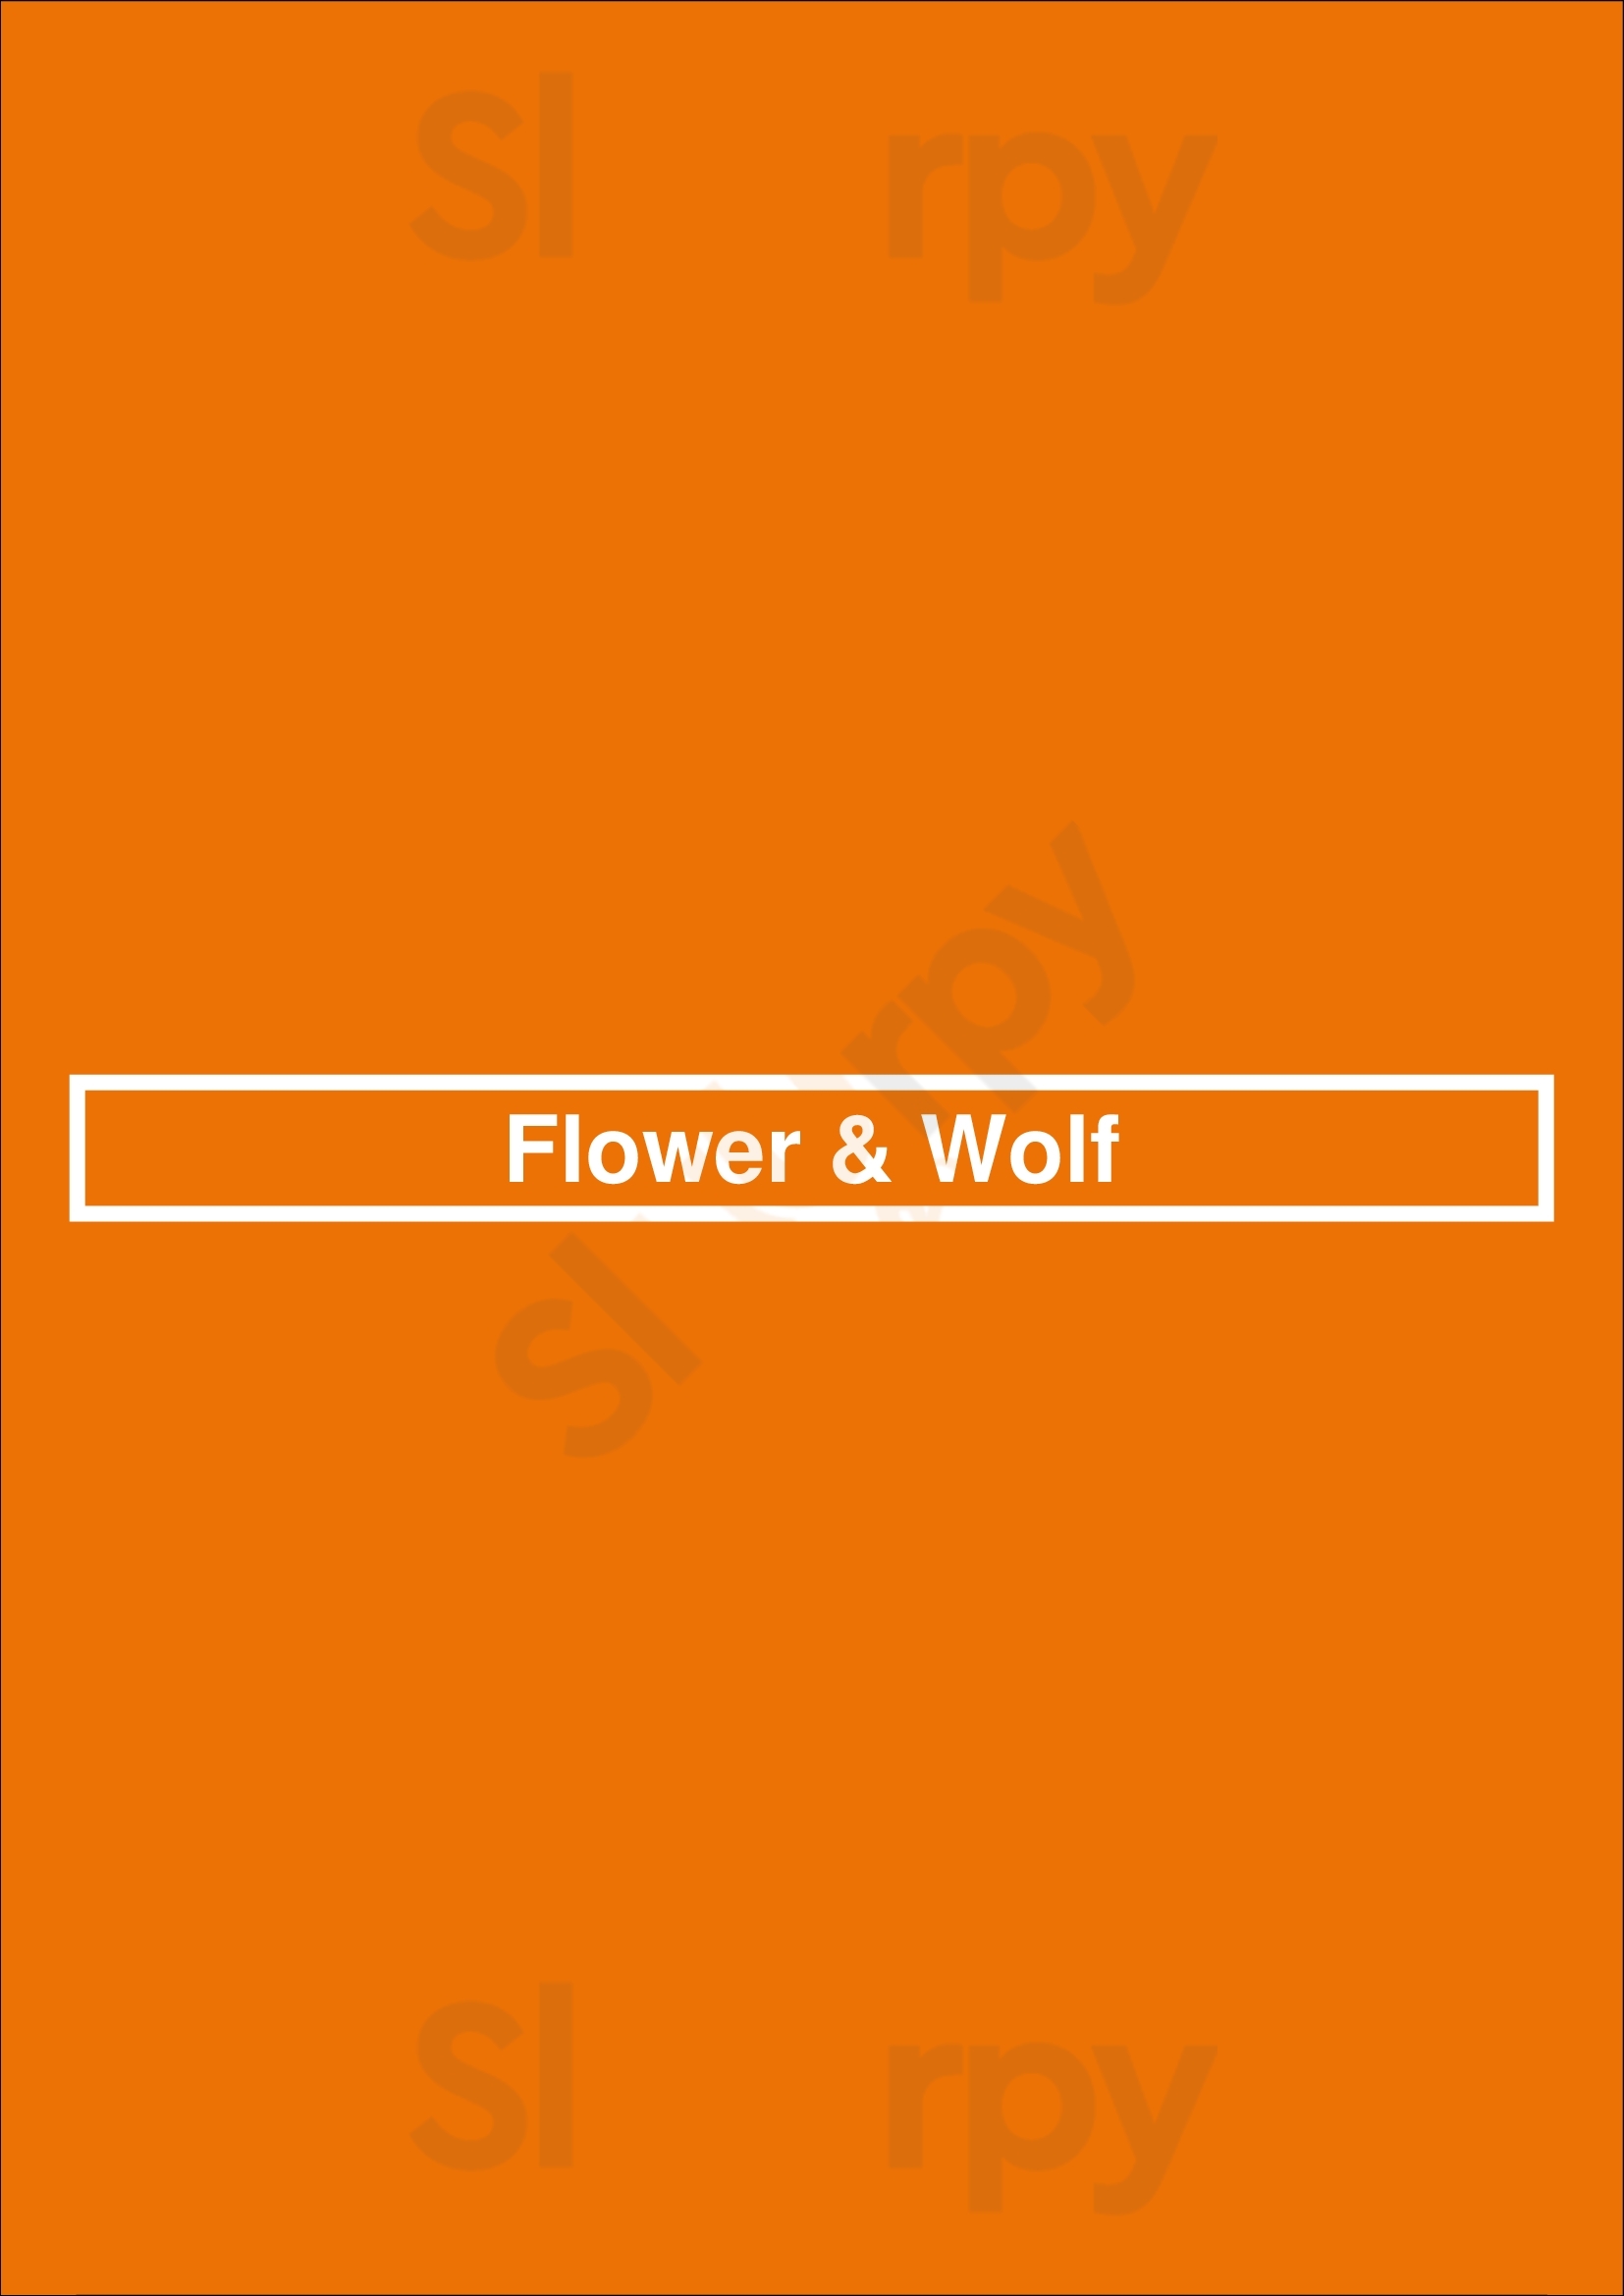 Flower & Wolf Calgary Menu - 1